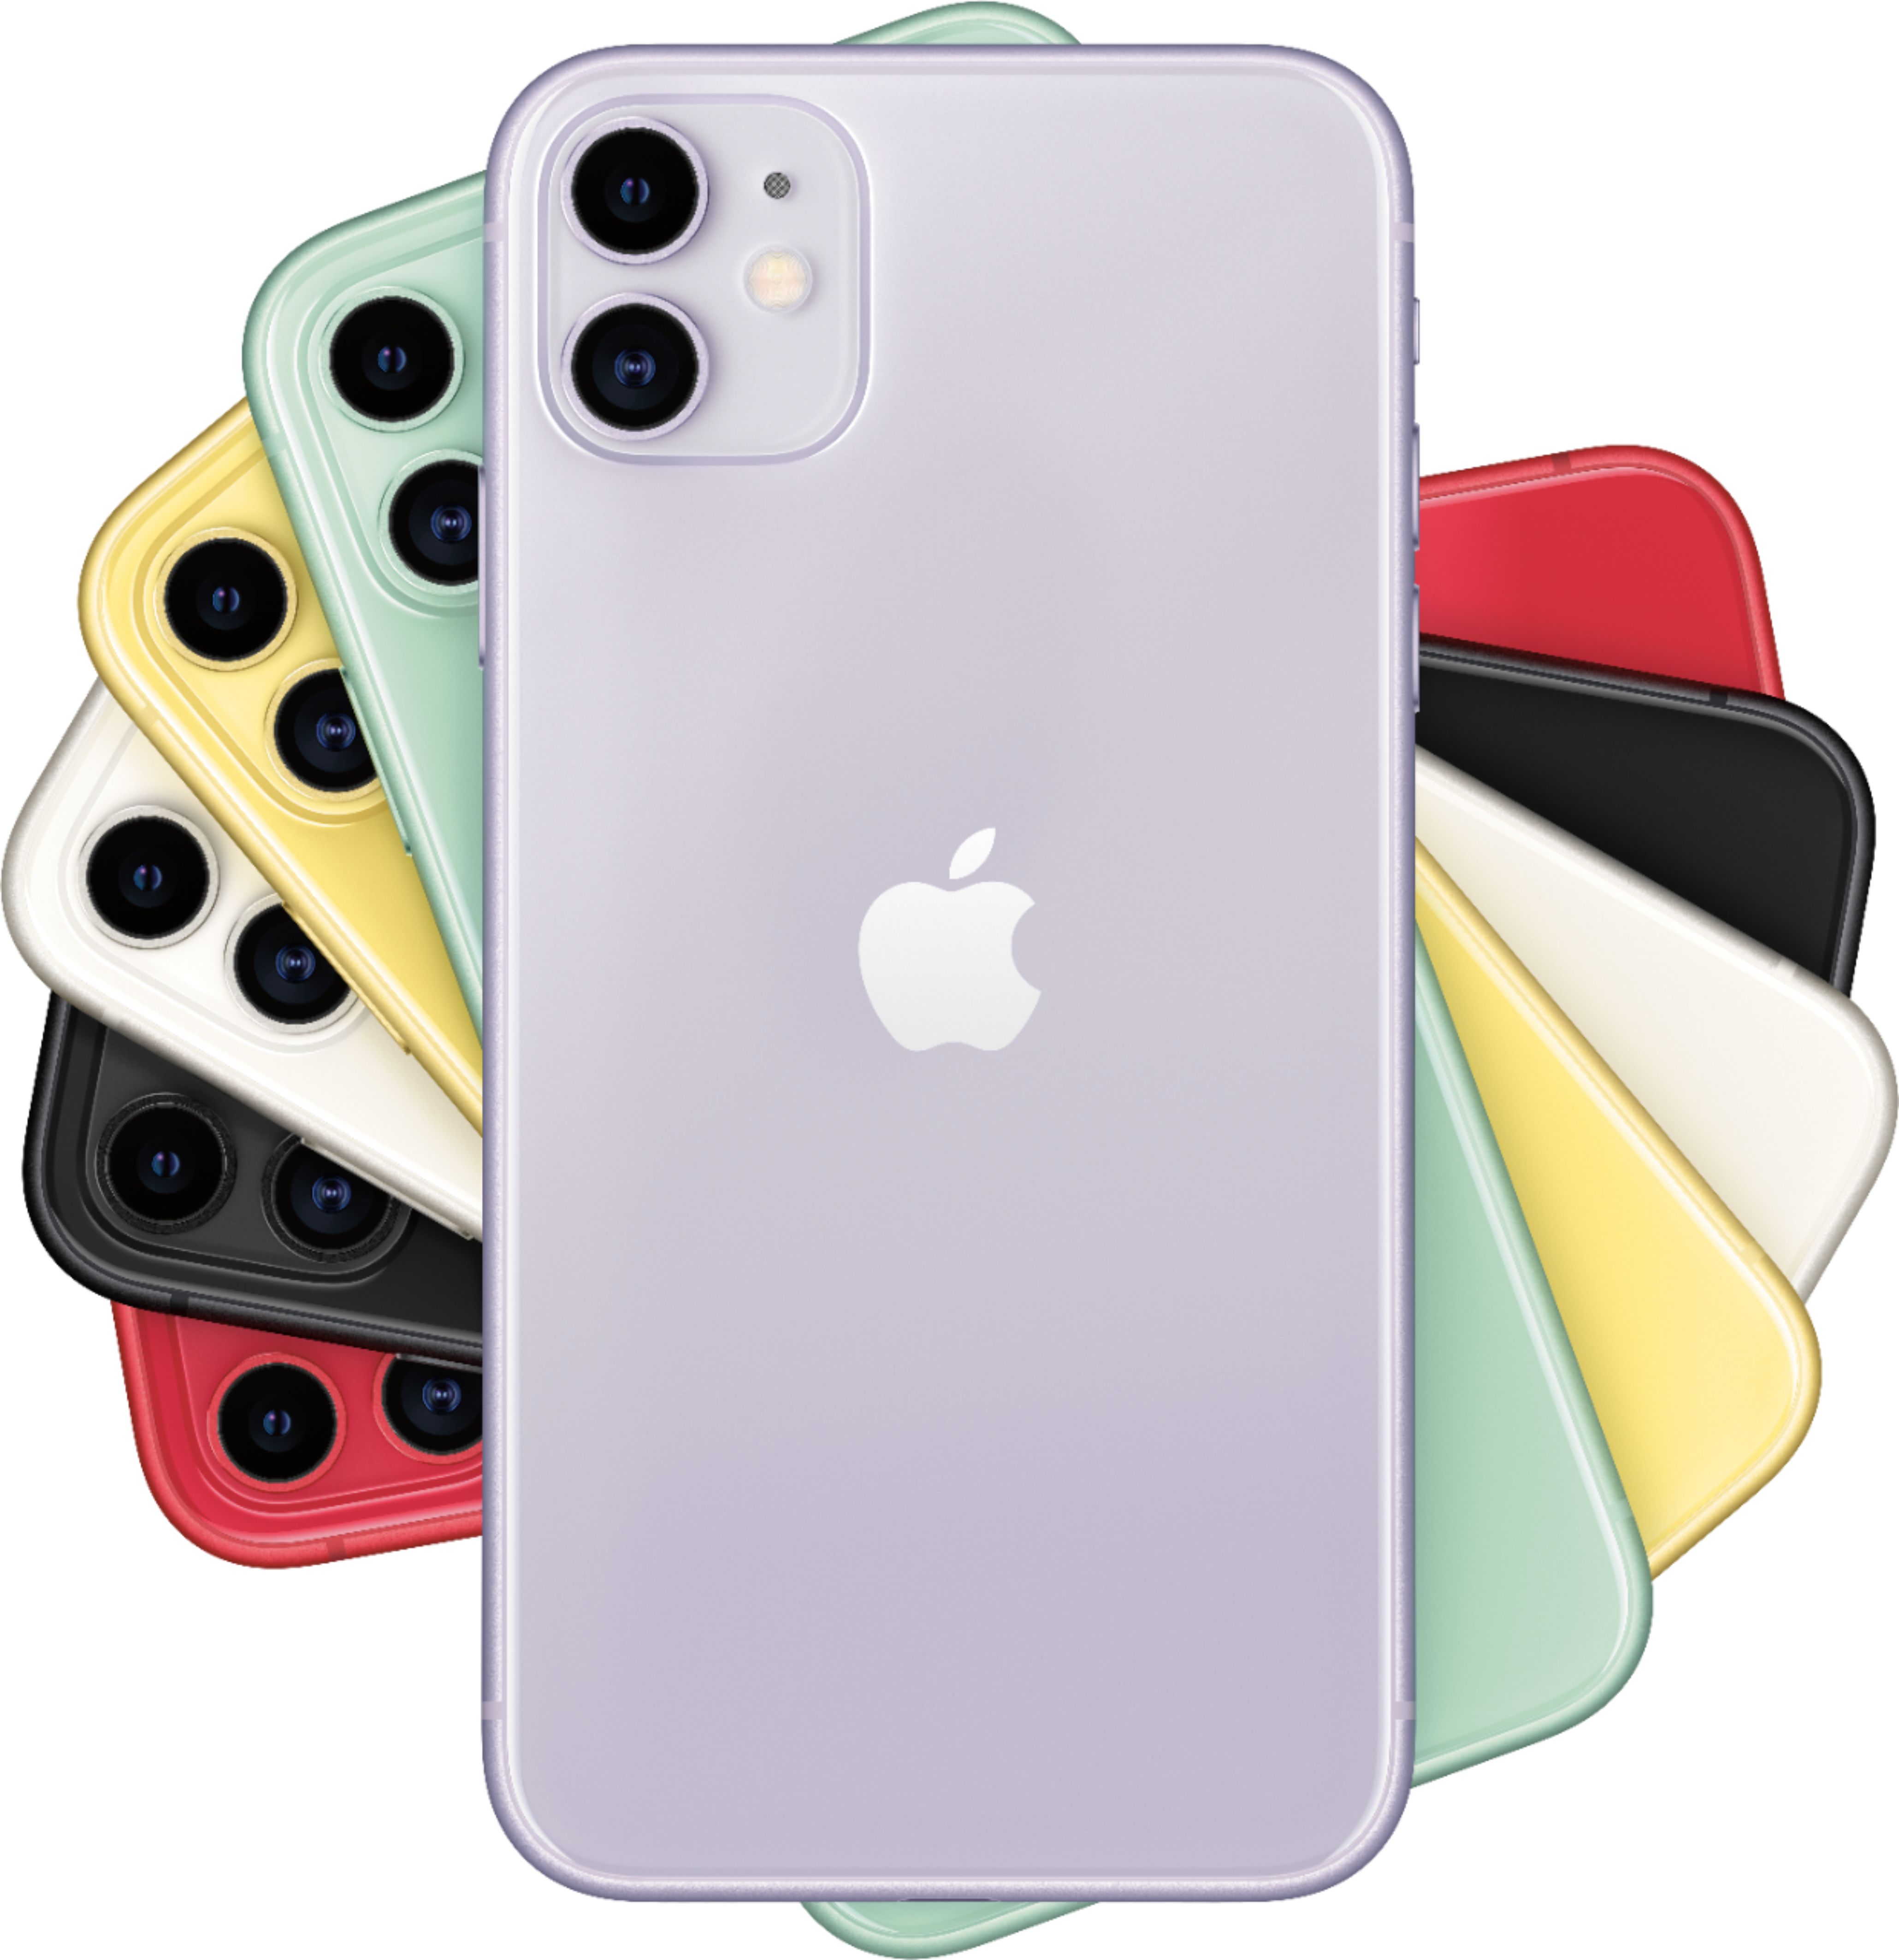 Best Buy: Apple iPhone 11 64GB Purple (Verizon) MWLC2LL/A